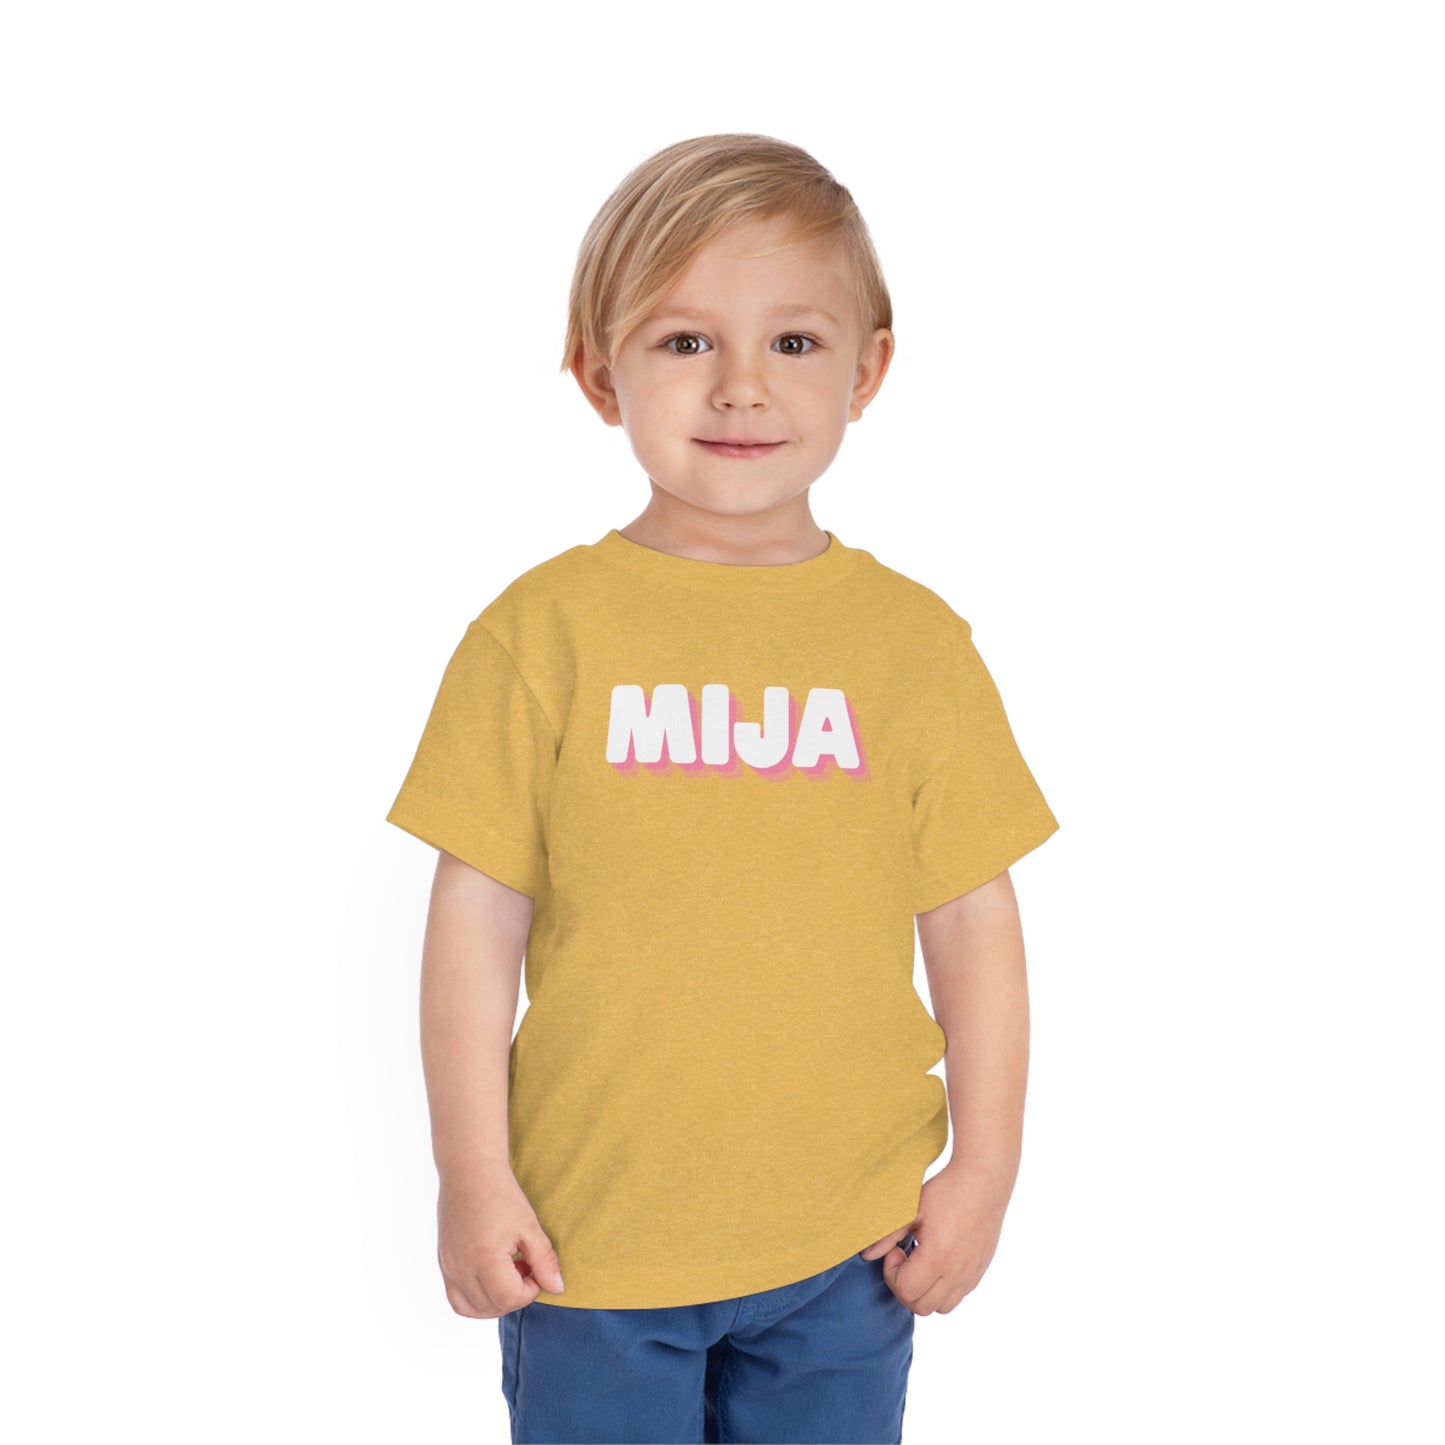 MIJA (daughter) Toddler Short Sleeve Tee